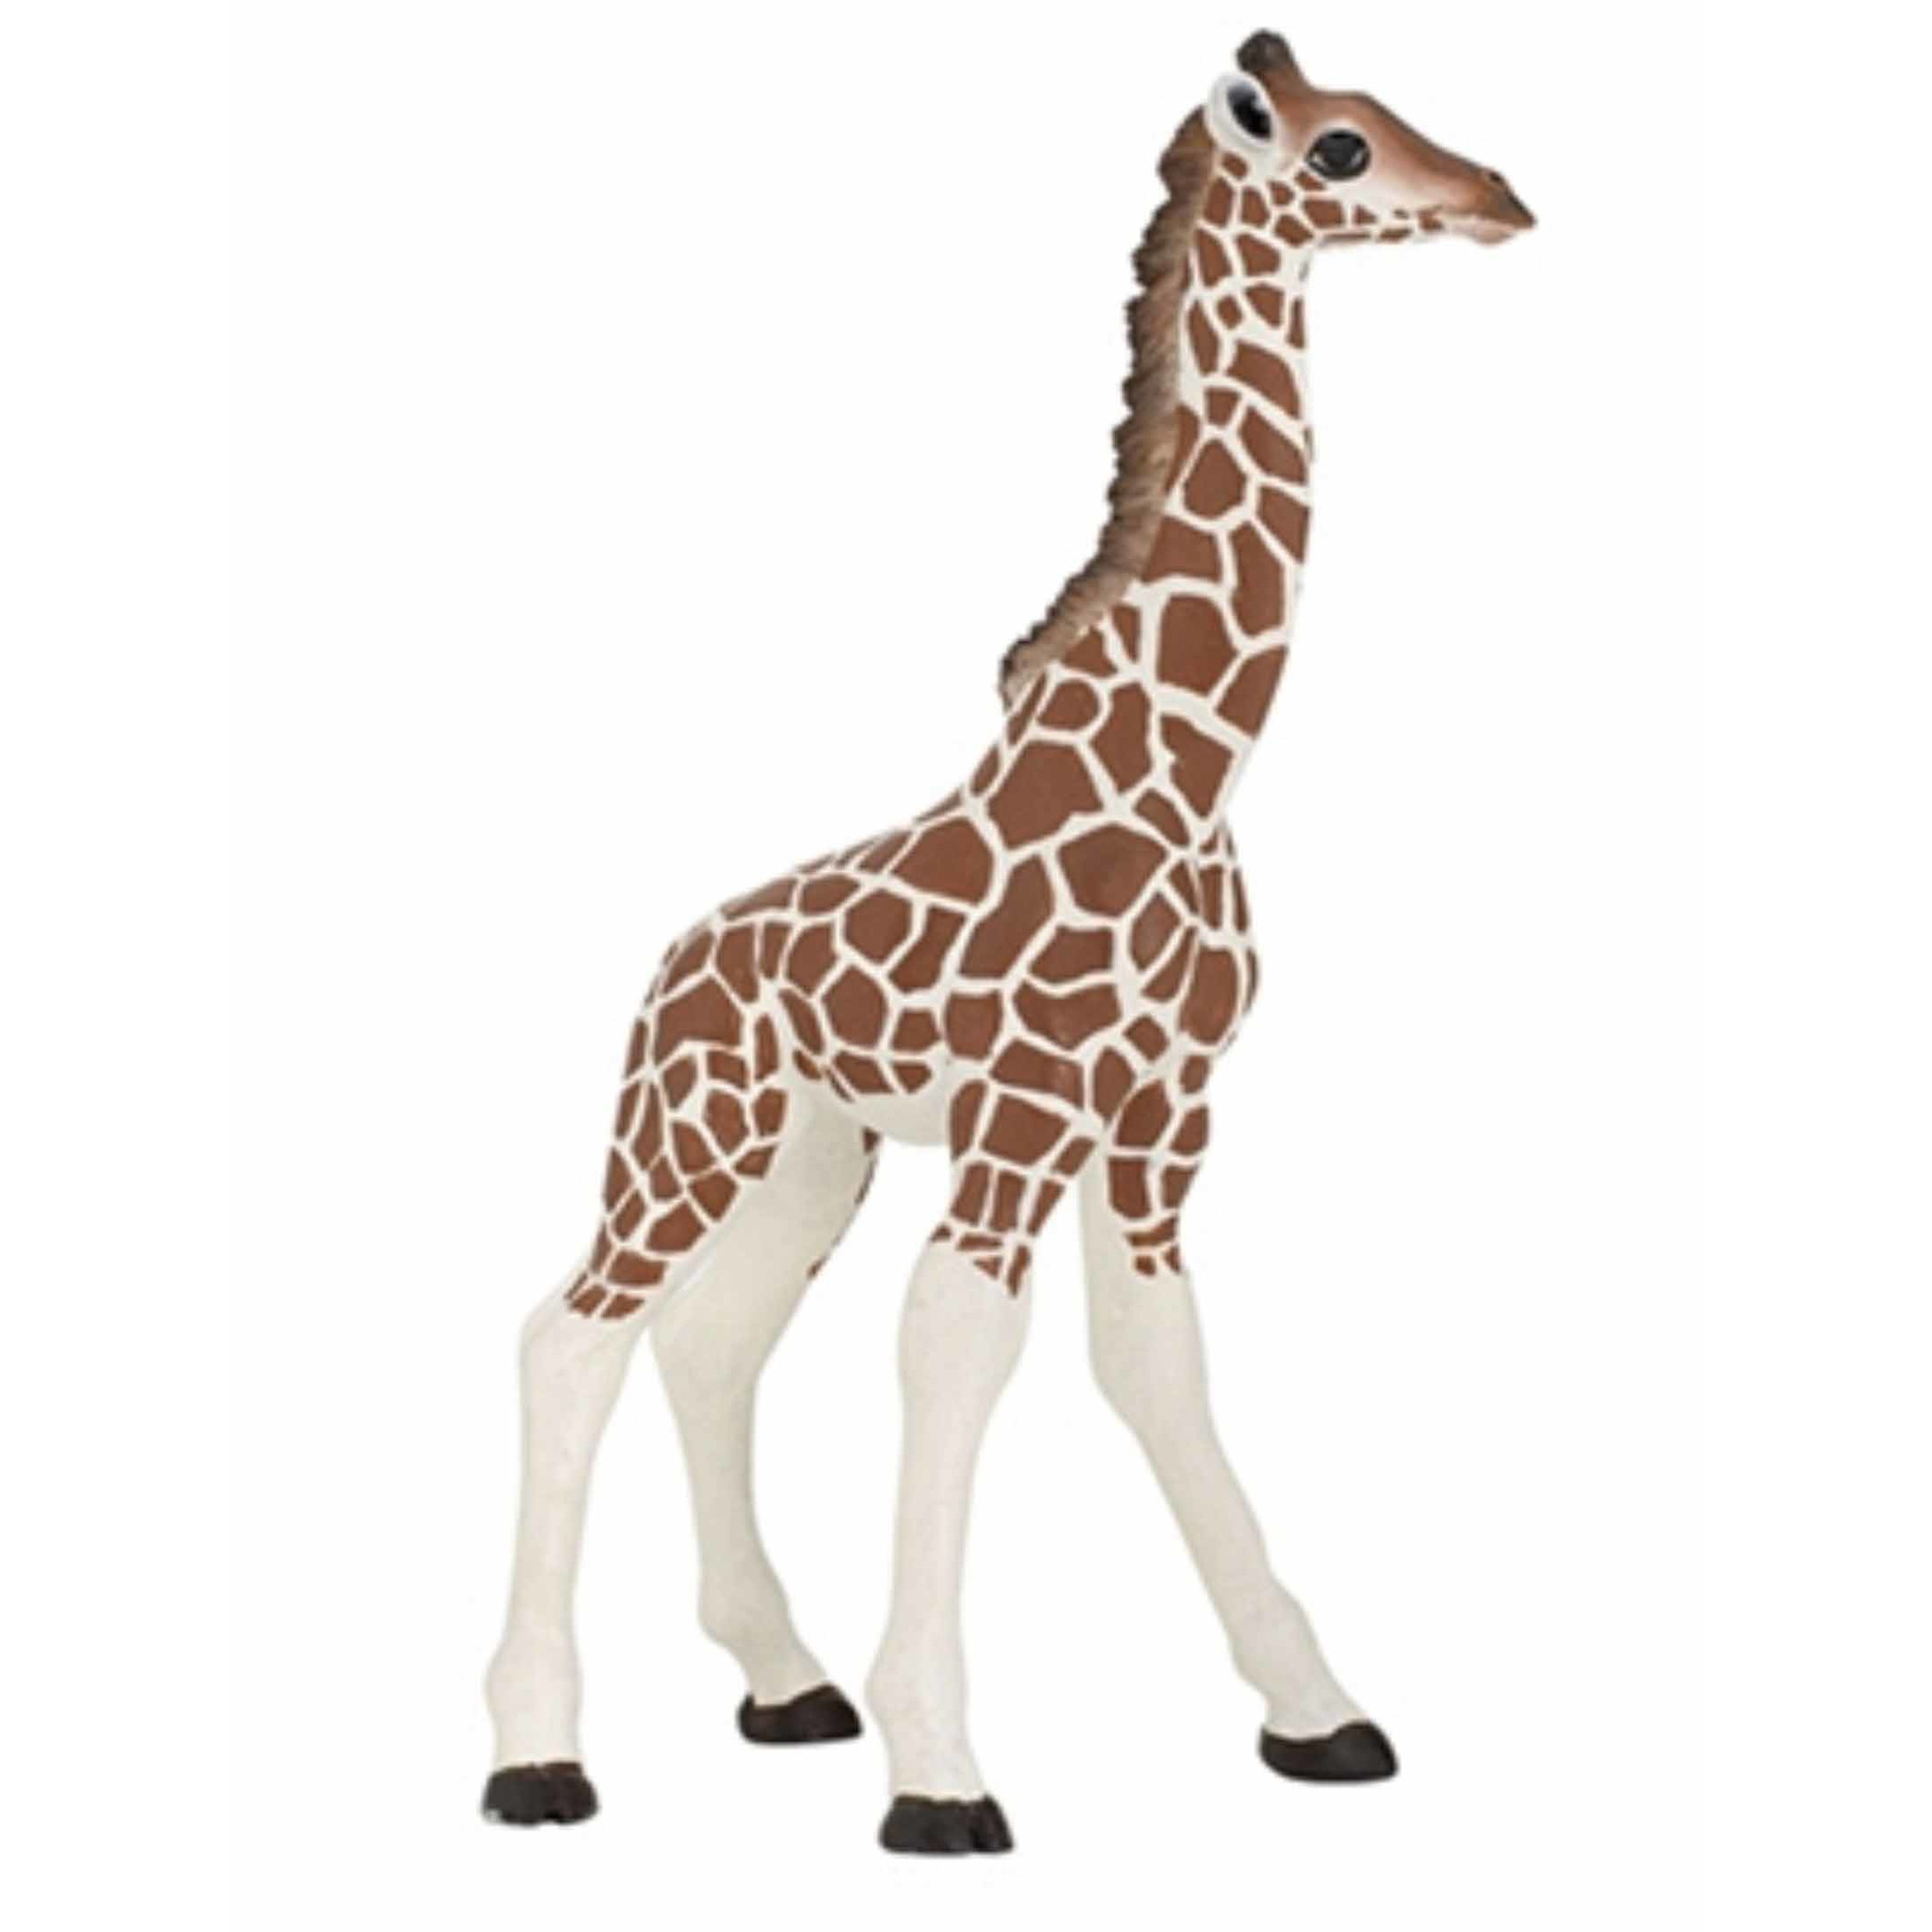 Plastic speelgoed figuur baby giraffe 9 cm